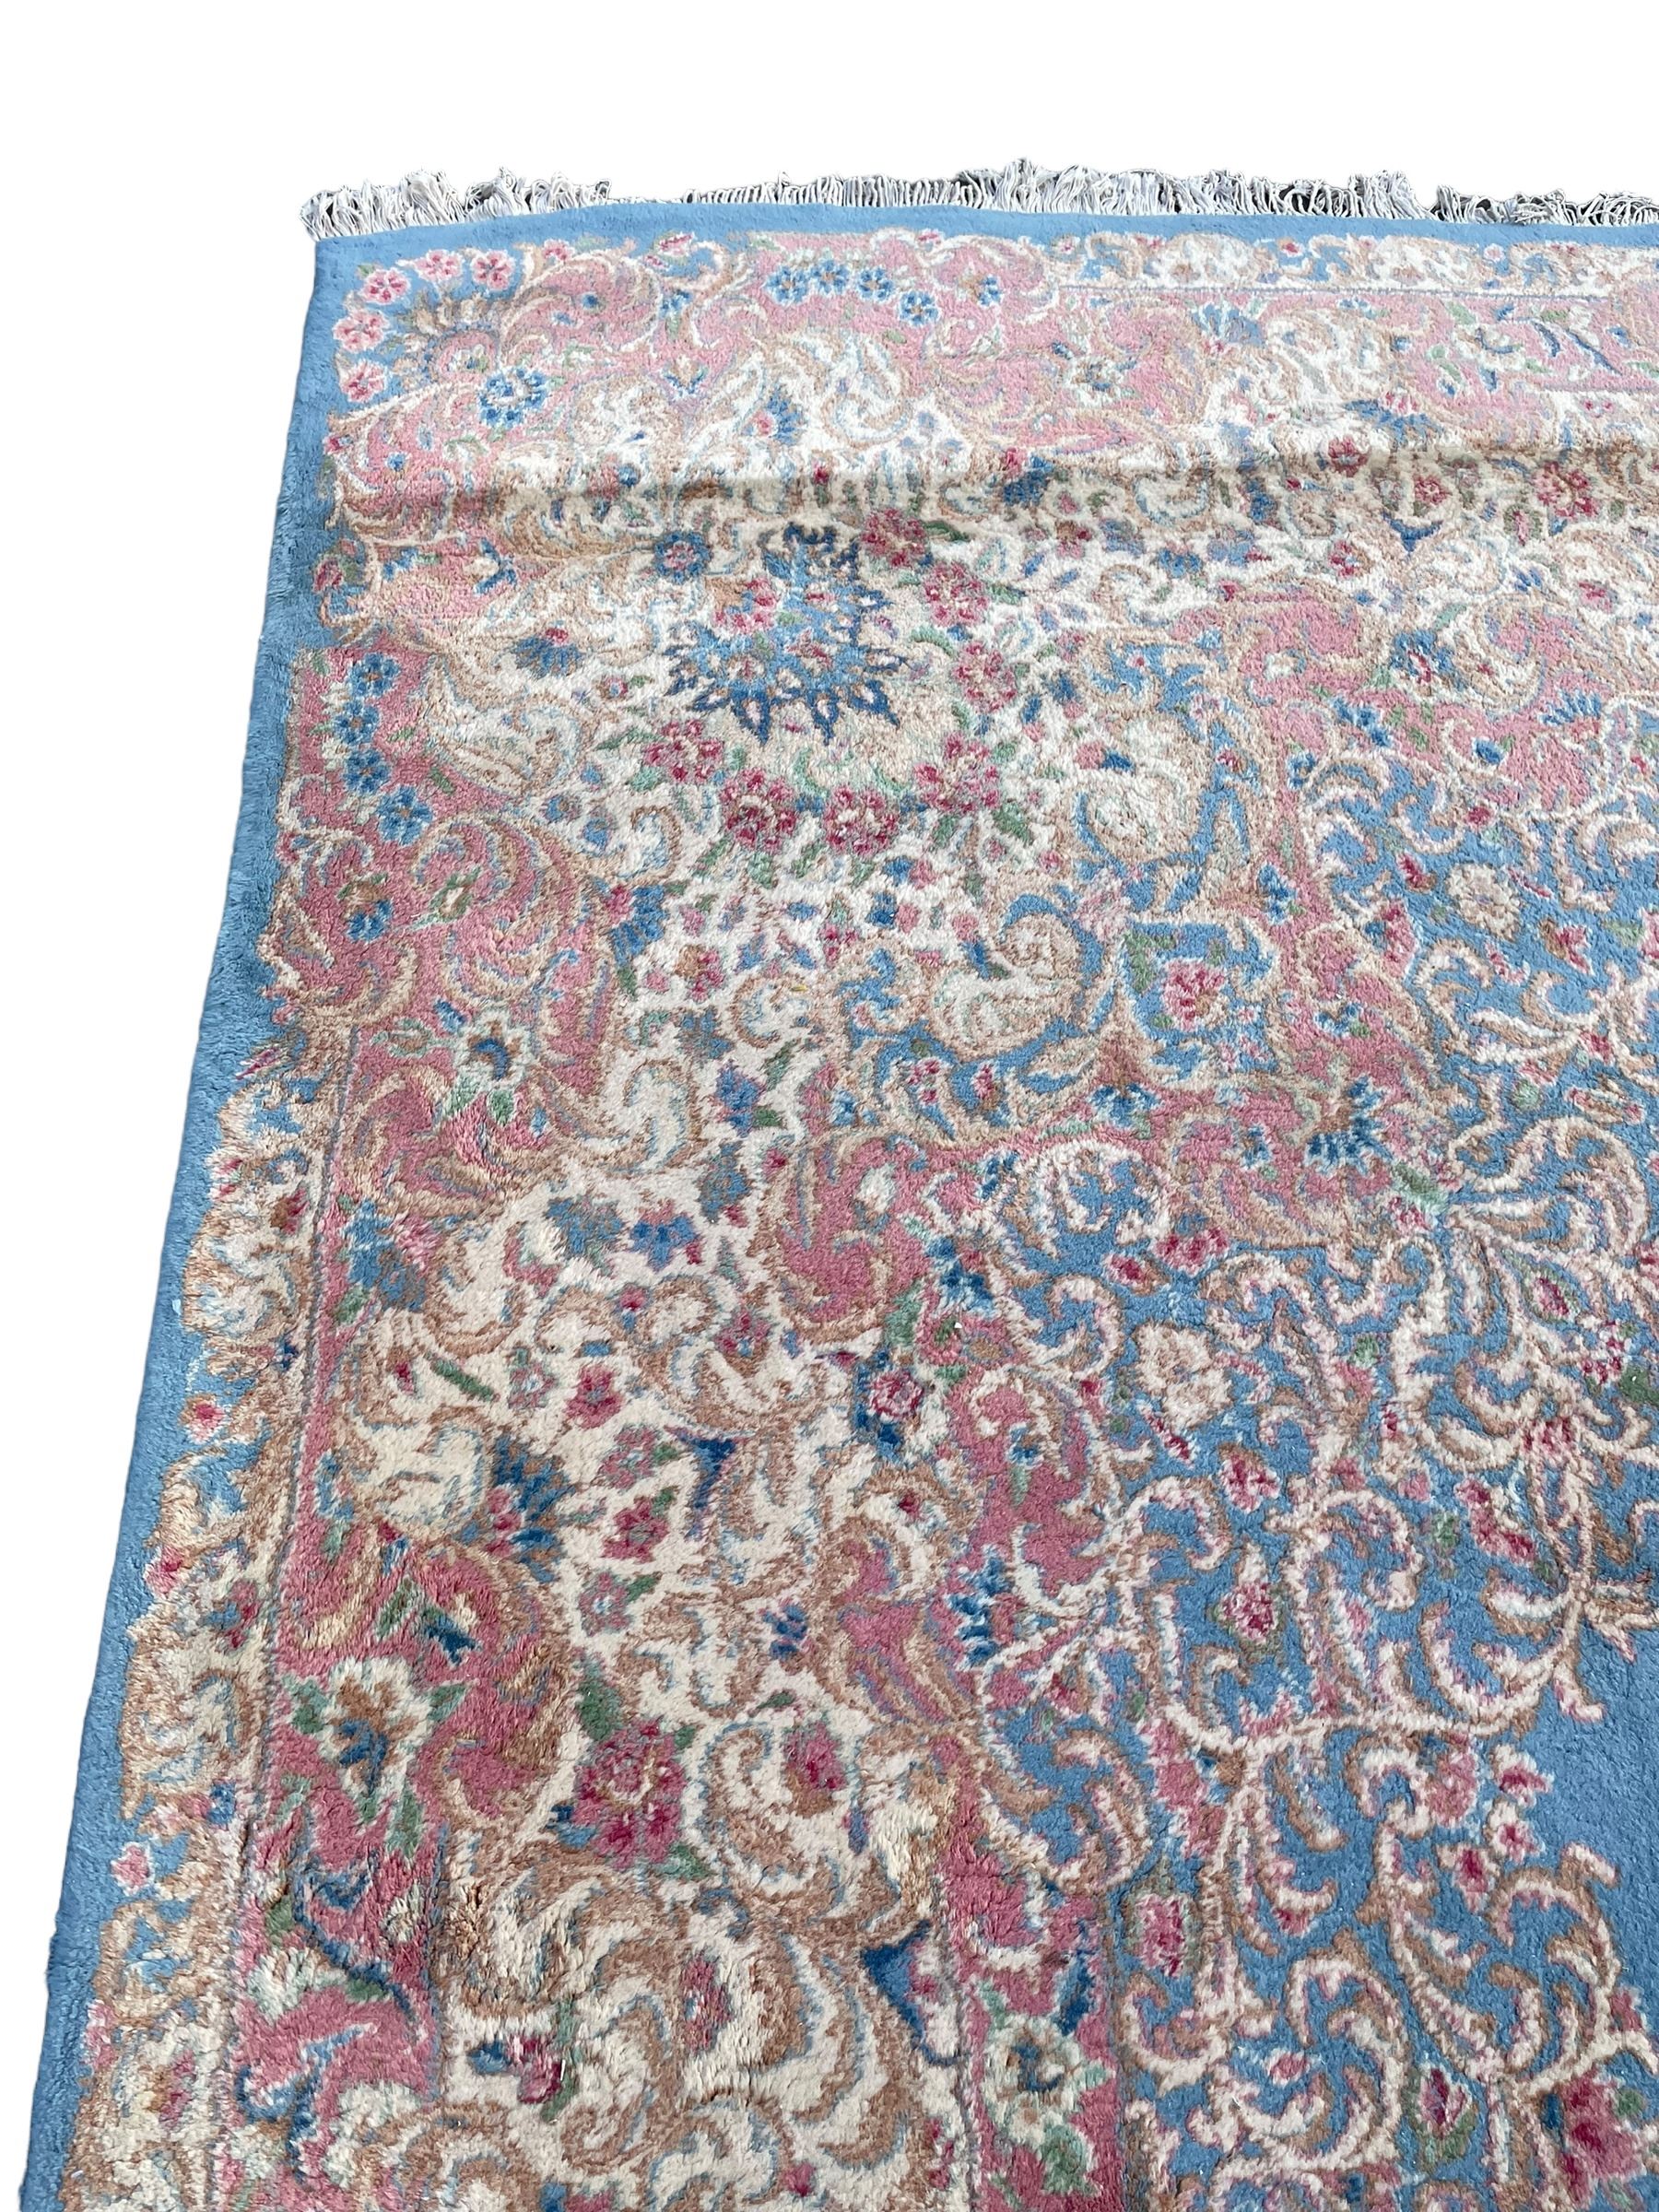 Large Persian design carpet - Image 5 of 8